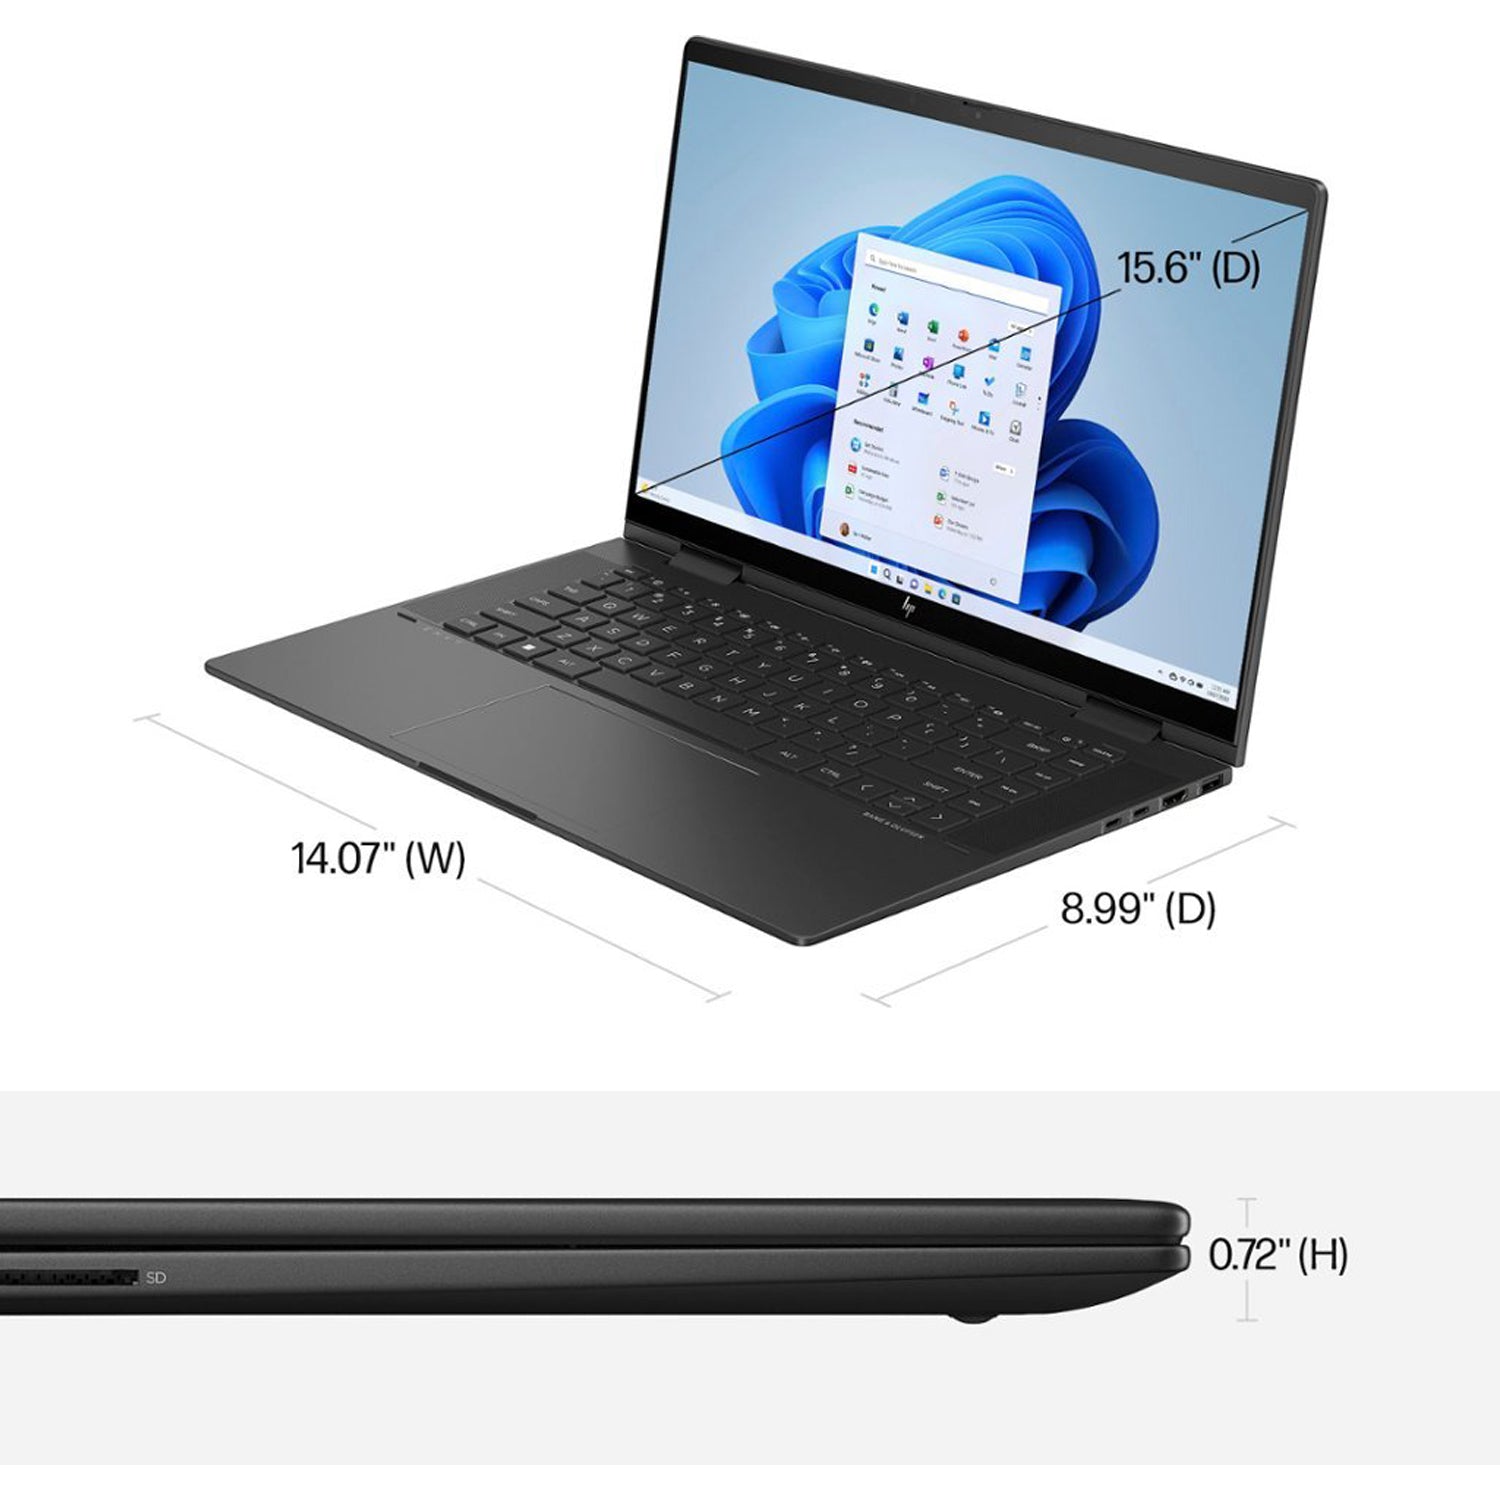 HP ENVY x360 Touchscreen 2-in-1 Laptop, 15.6